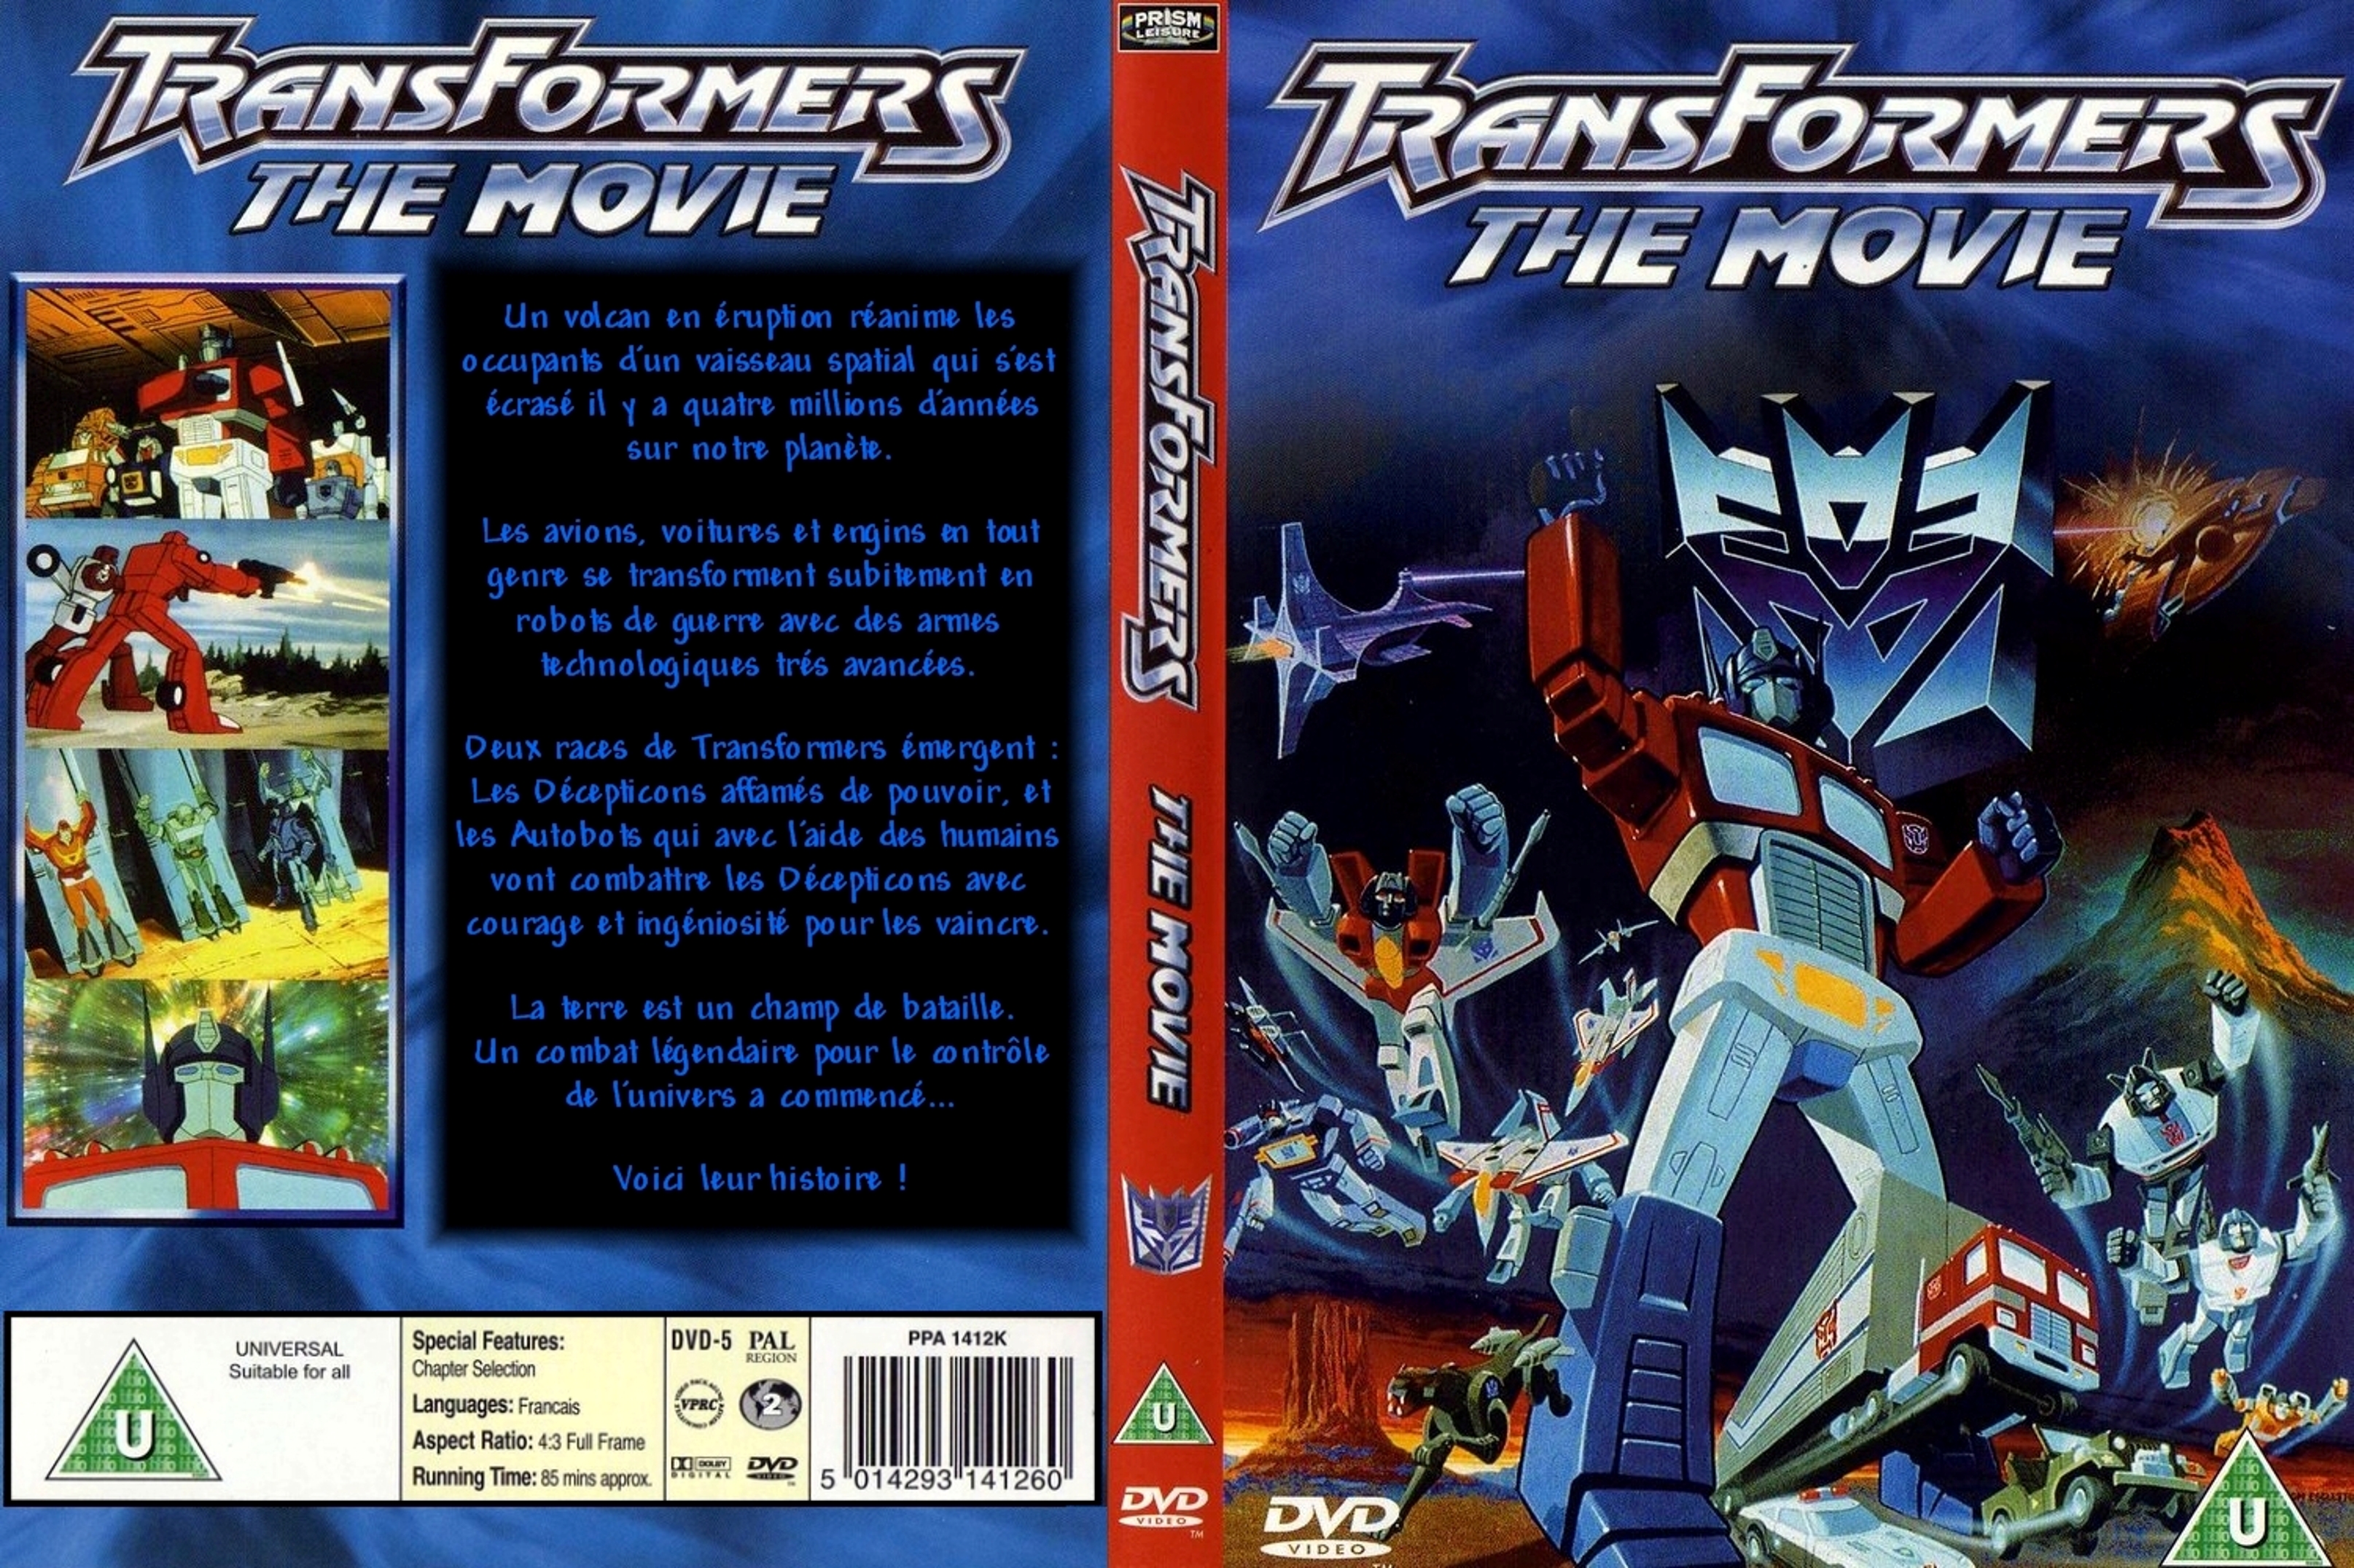 Jaquette DVD Transformers the movie (dessin anim) custom